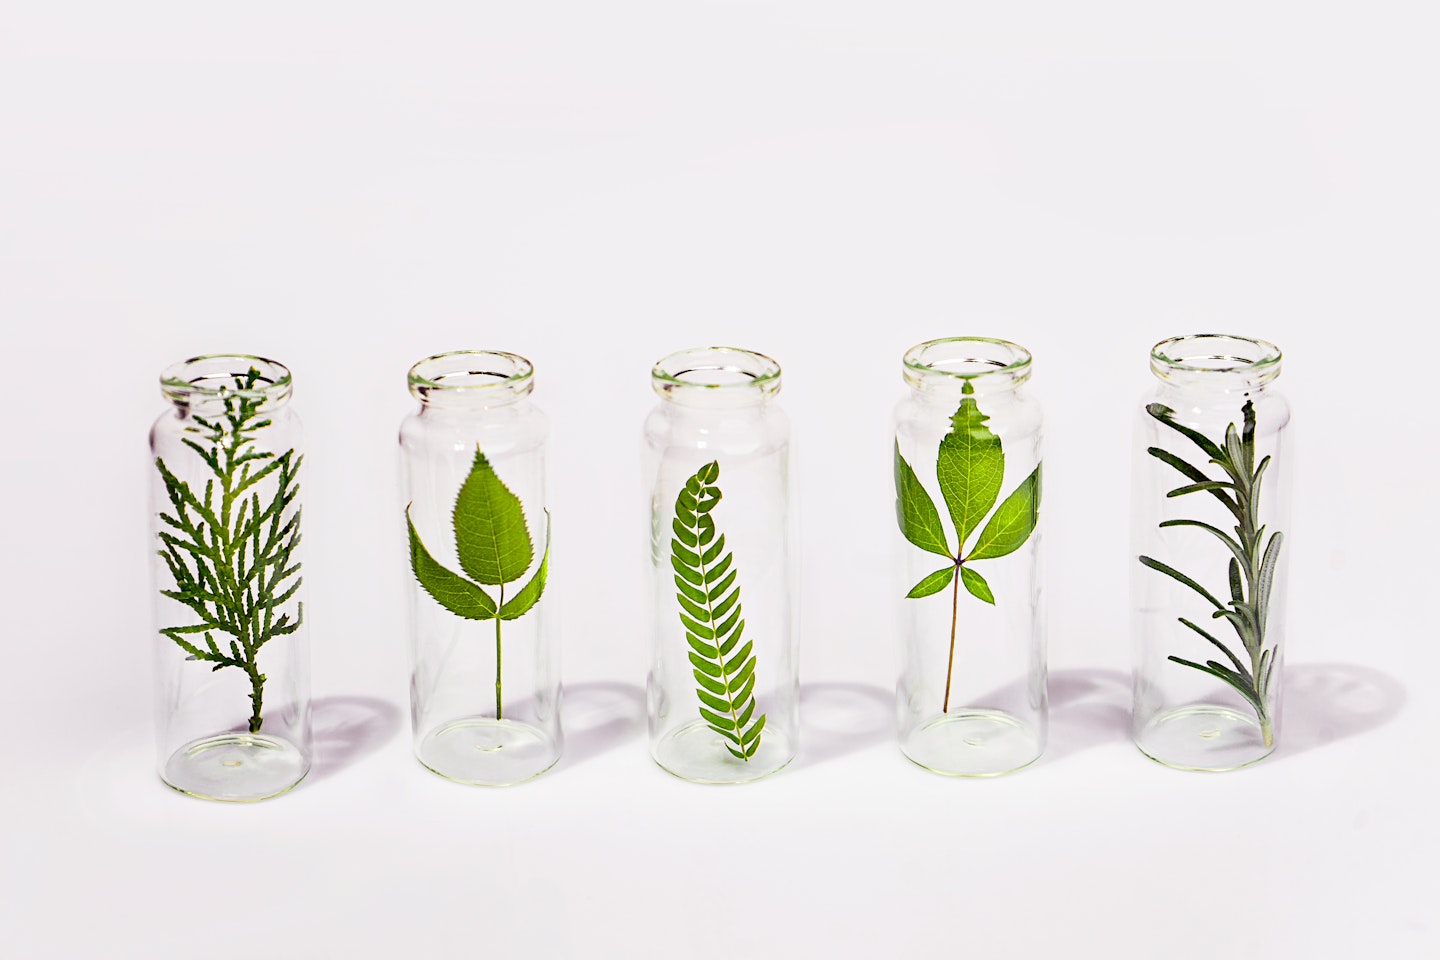 Leave plants growing in tall jars